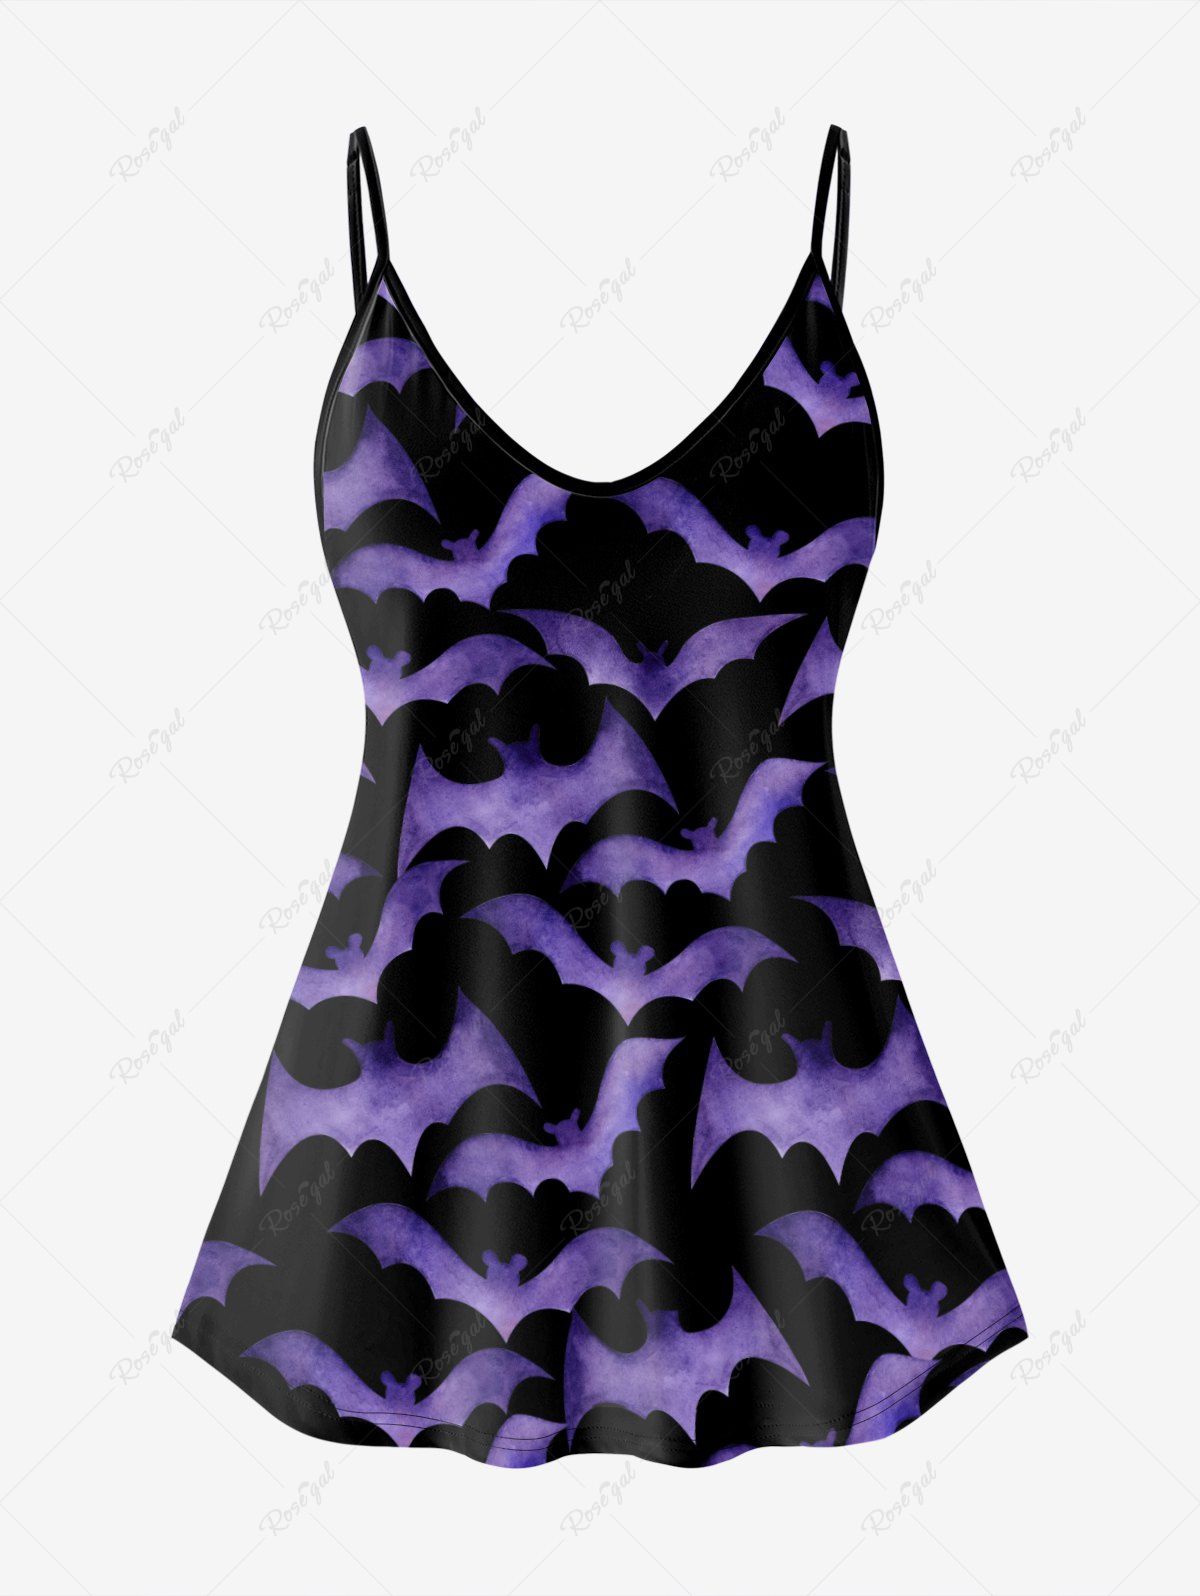 Trendy Gothic Allover Bat Print Cami Top  